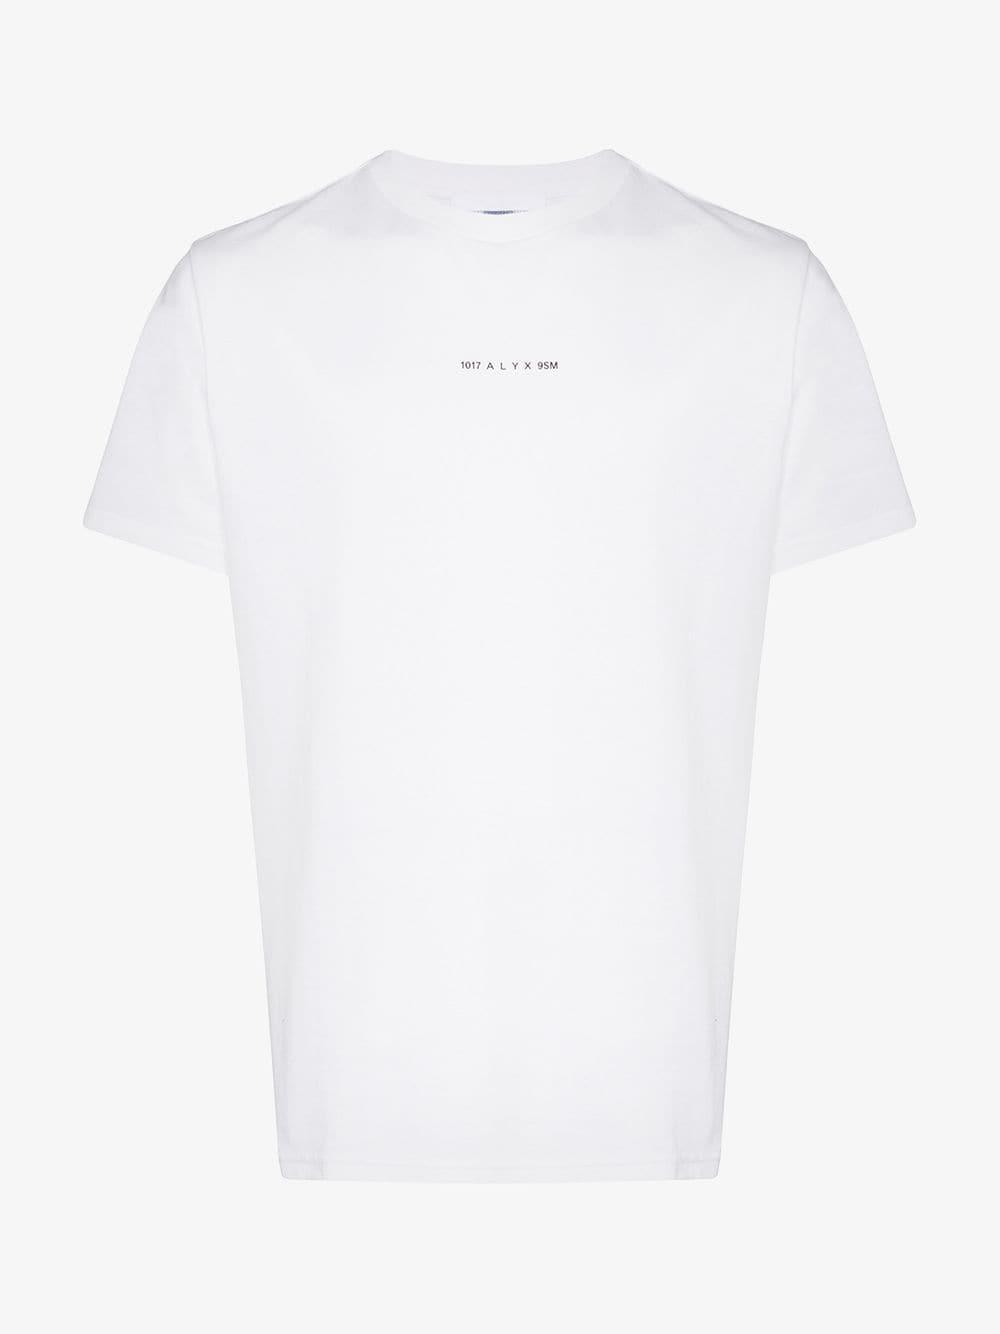 1017 ALYX 9SM Cotton Ex Nihilo Logo-print T-shirt in White for Men - Lyst